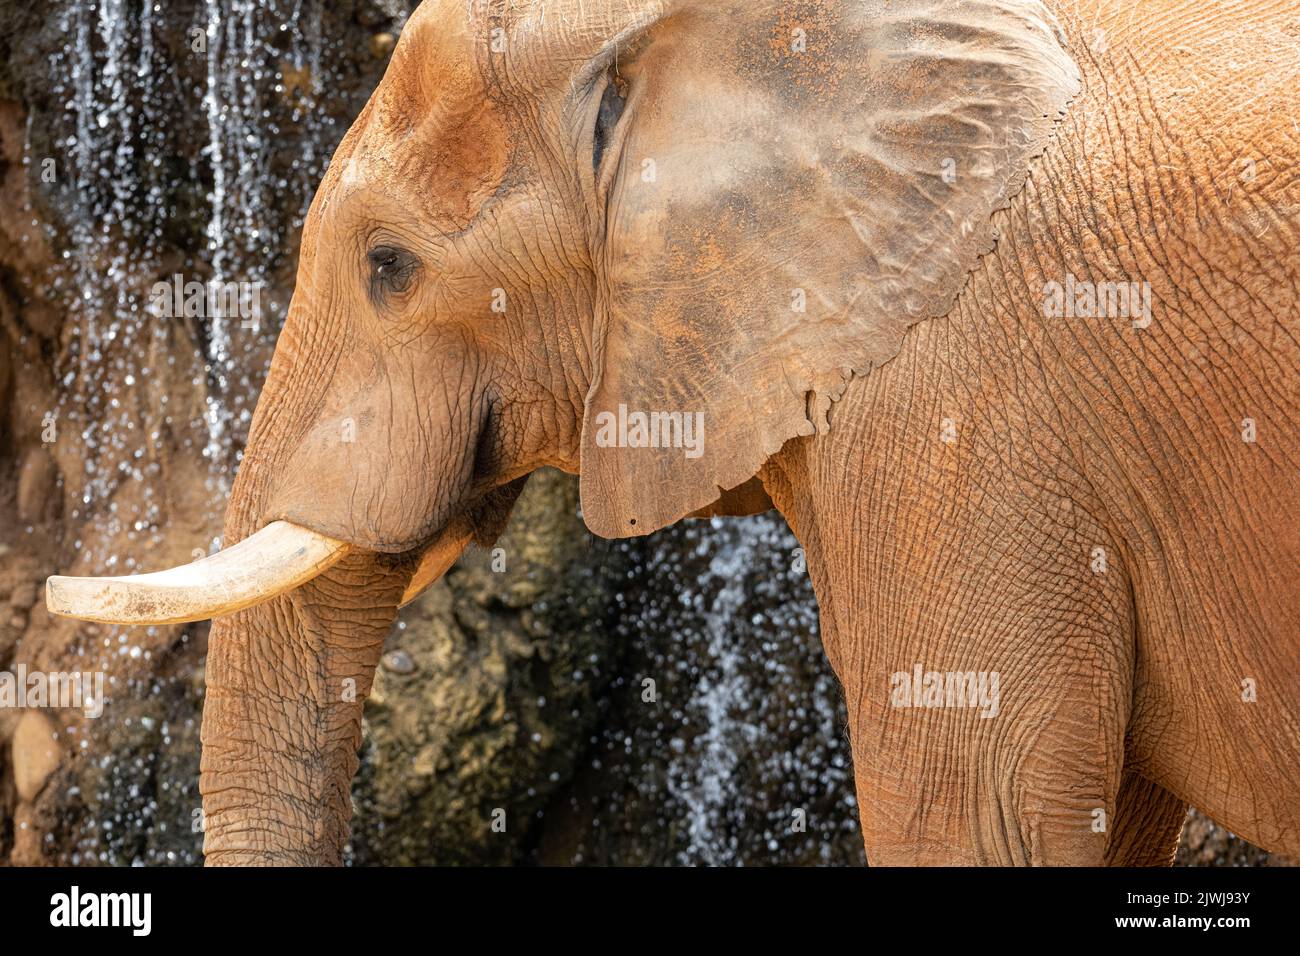 African elephant (Loxodonta africana) next to a waterfall in the African Savanna habitat at Zoo Atlanta in Atlanta, Georgia. (USA) Stock Photo